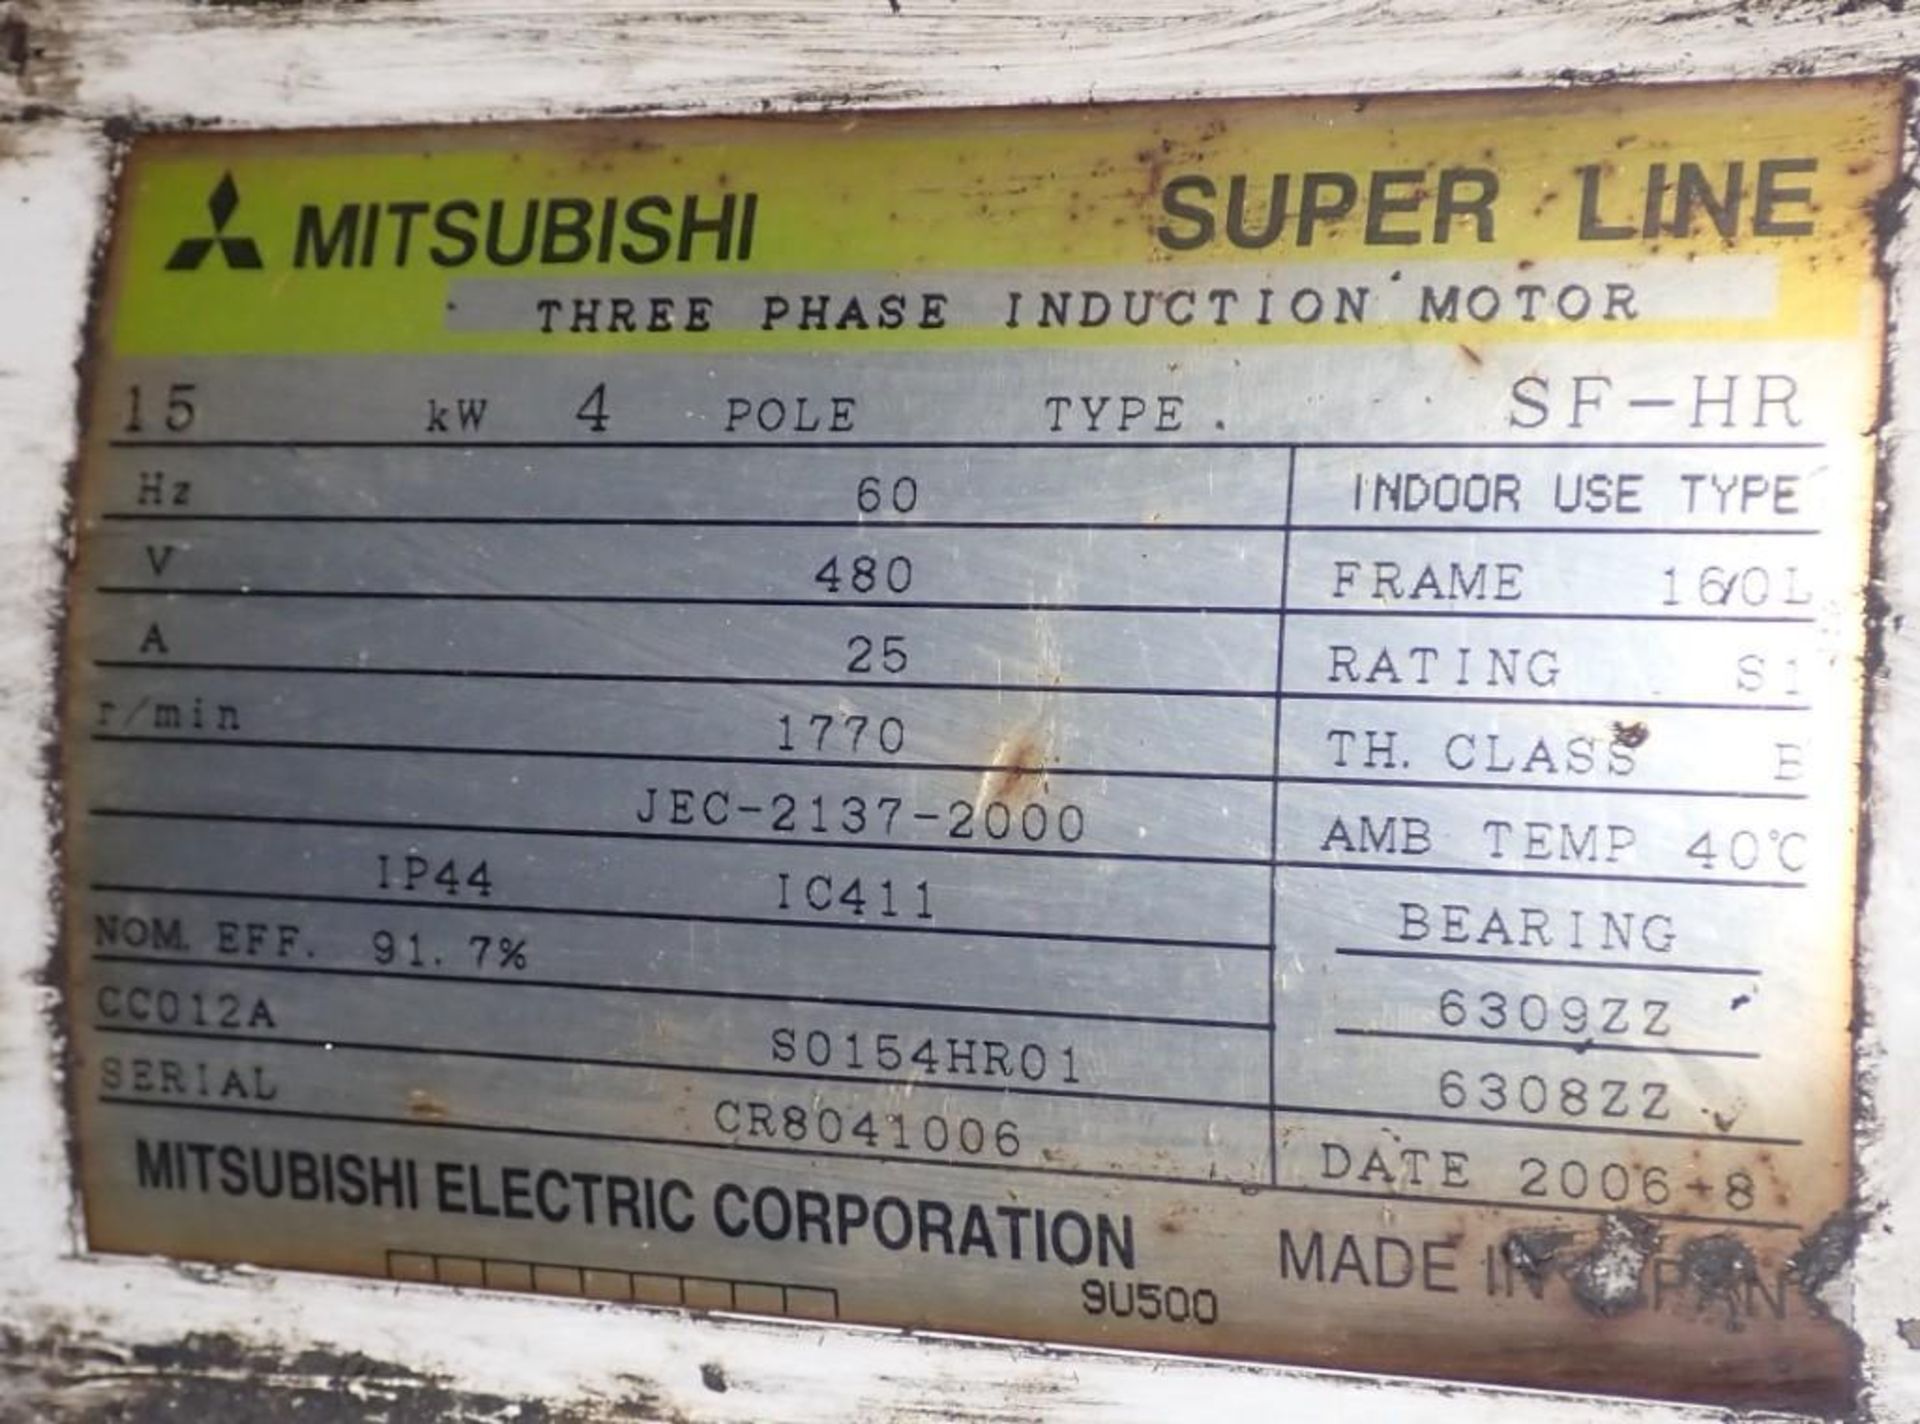 15 KW Mitsubishi #SF-HR Motor w/ Pump - Image 4 of 4